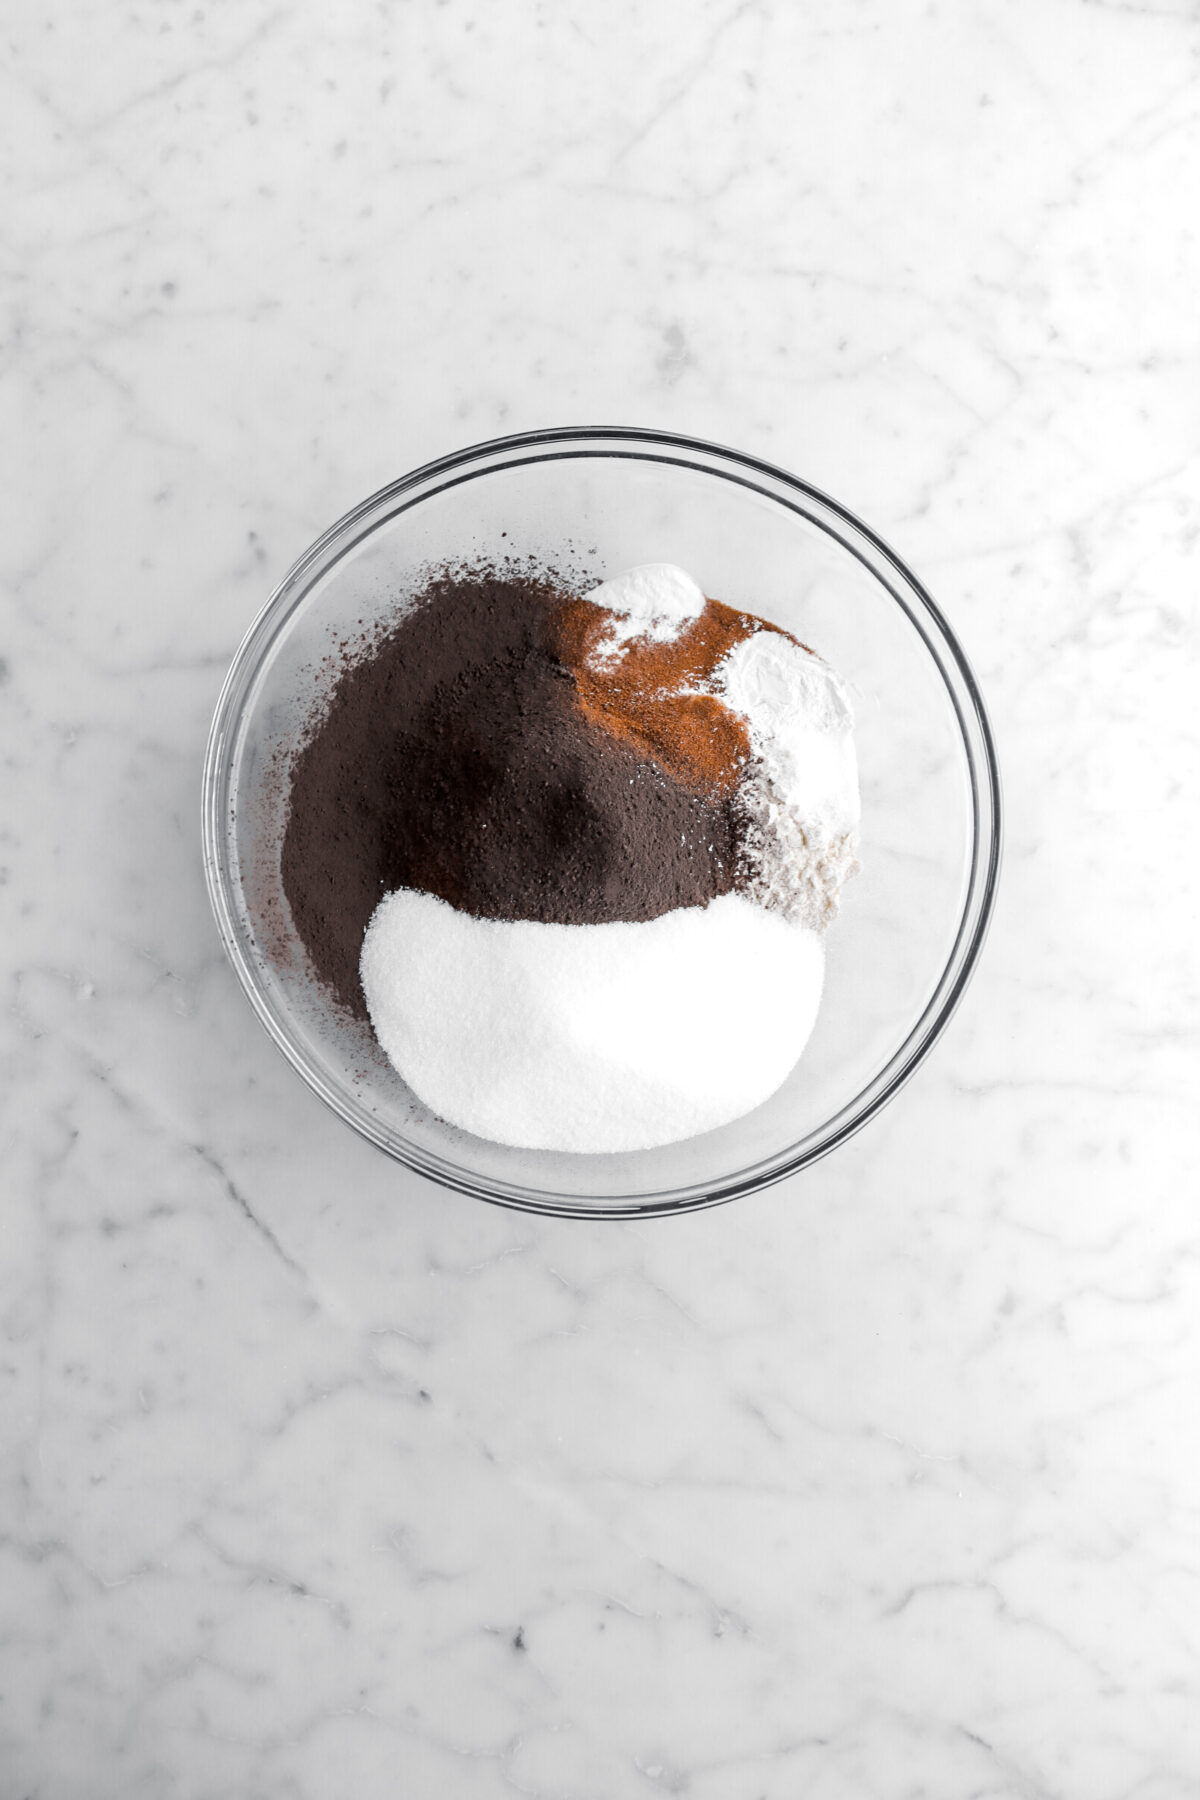 sugar, cocoa powder, flour, leavening, and espresso powder in glass bowl.